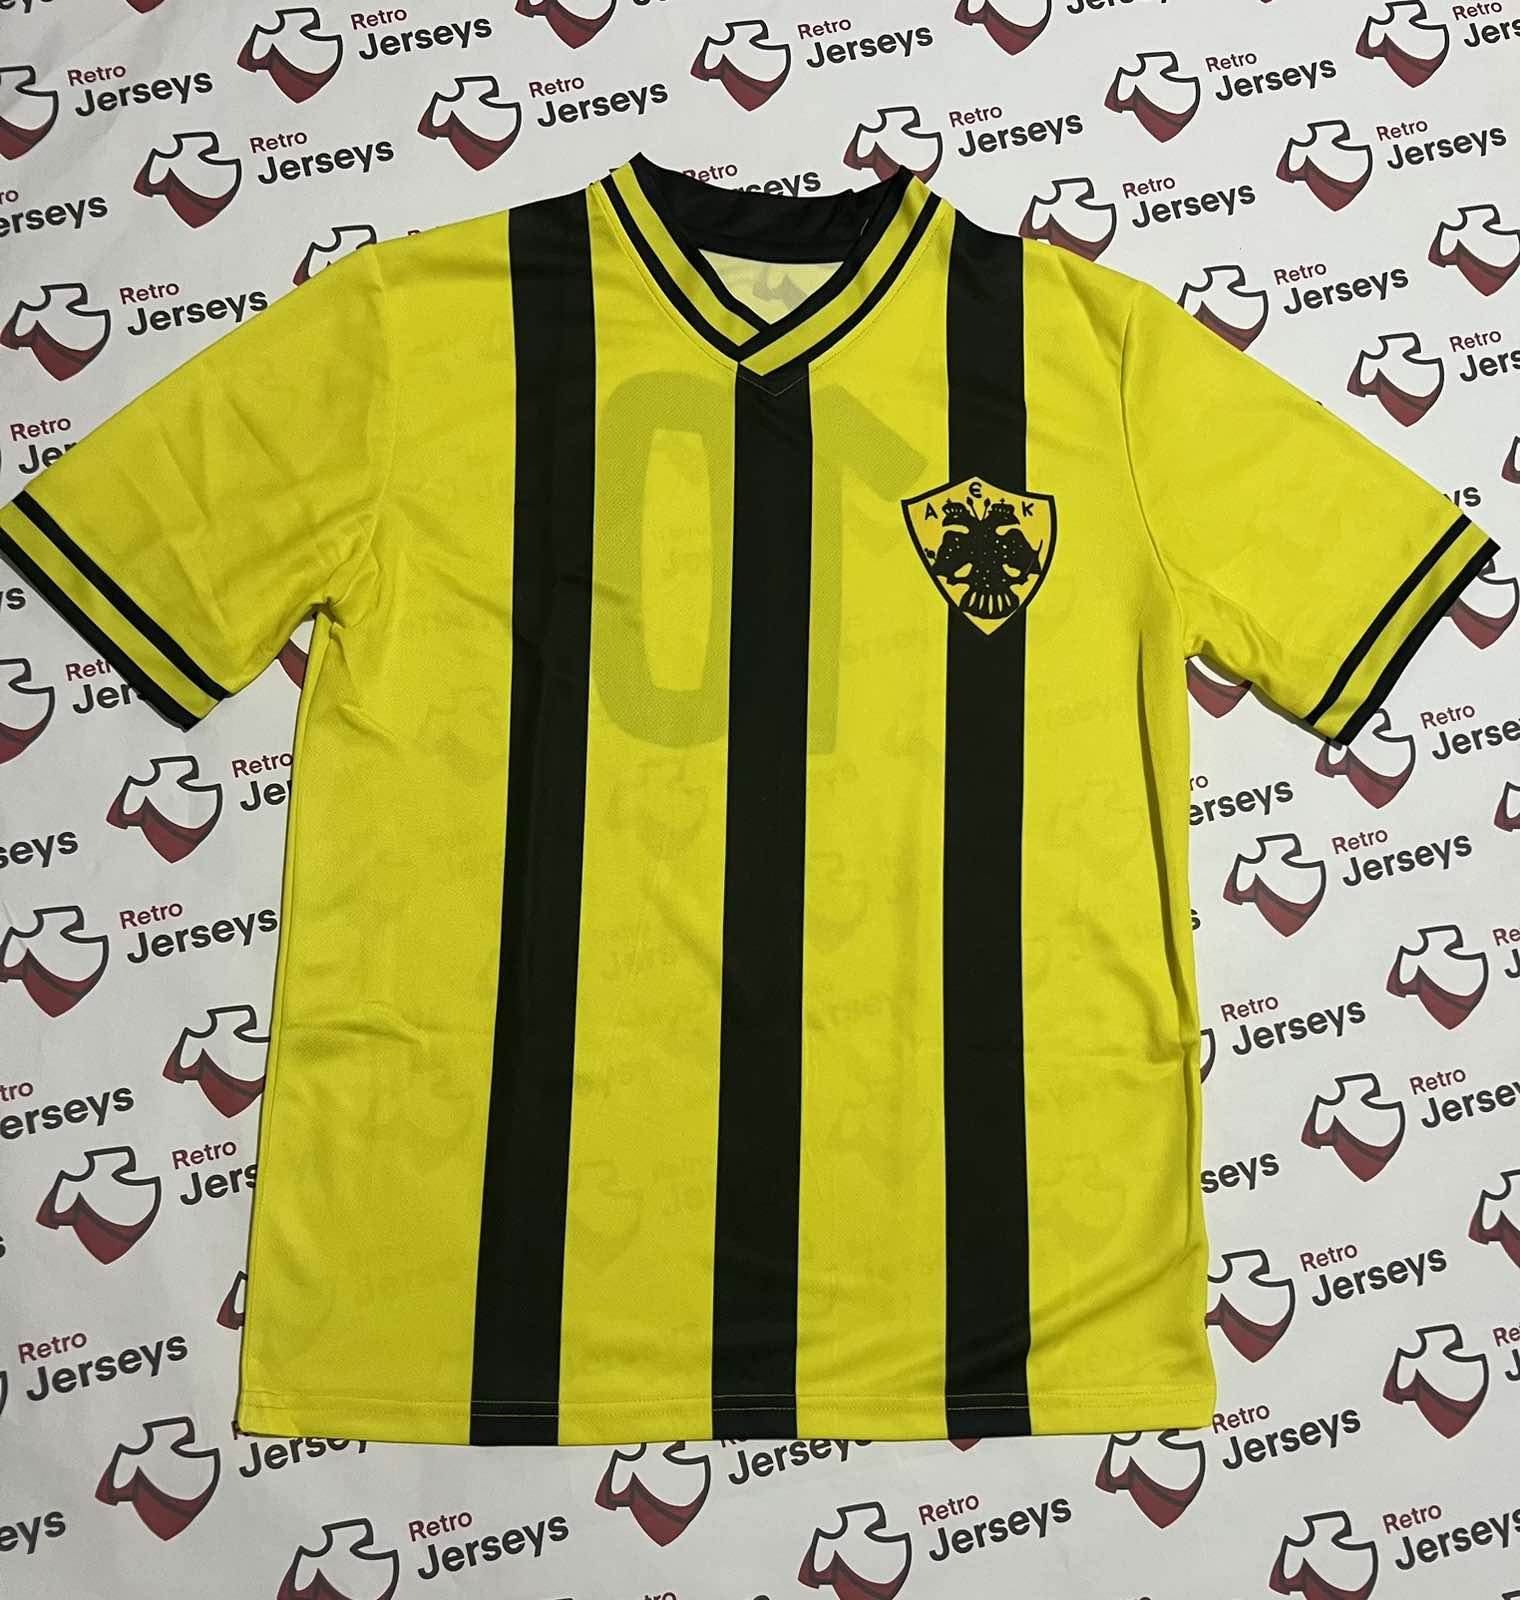 AEK Athens Shirt 1971-1972 Home - Retro Jerseys, φανέλα αεκ